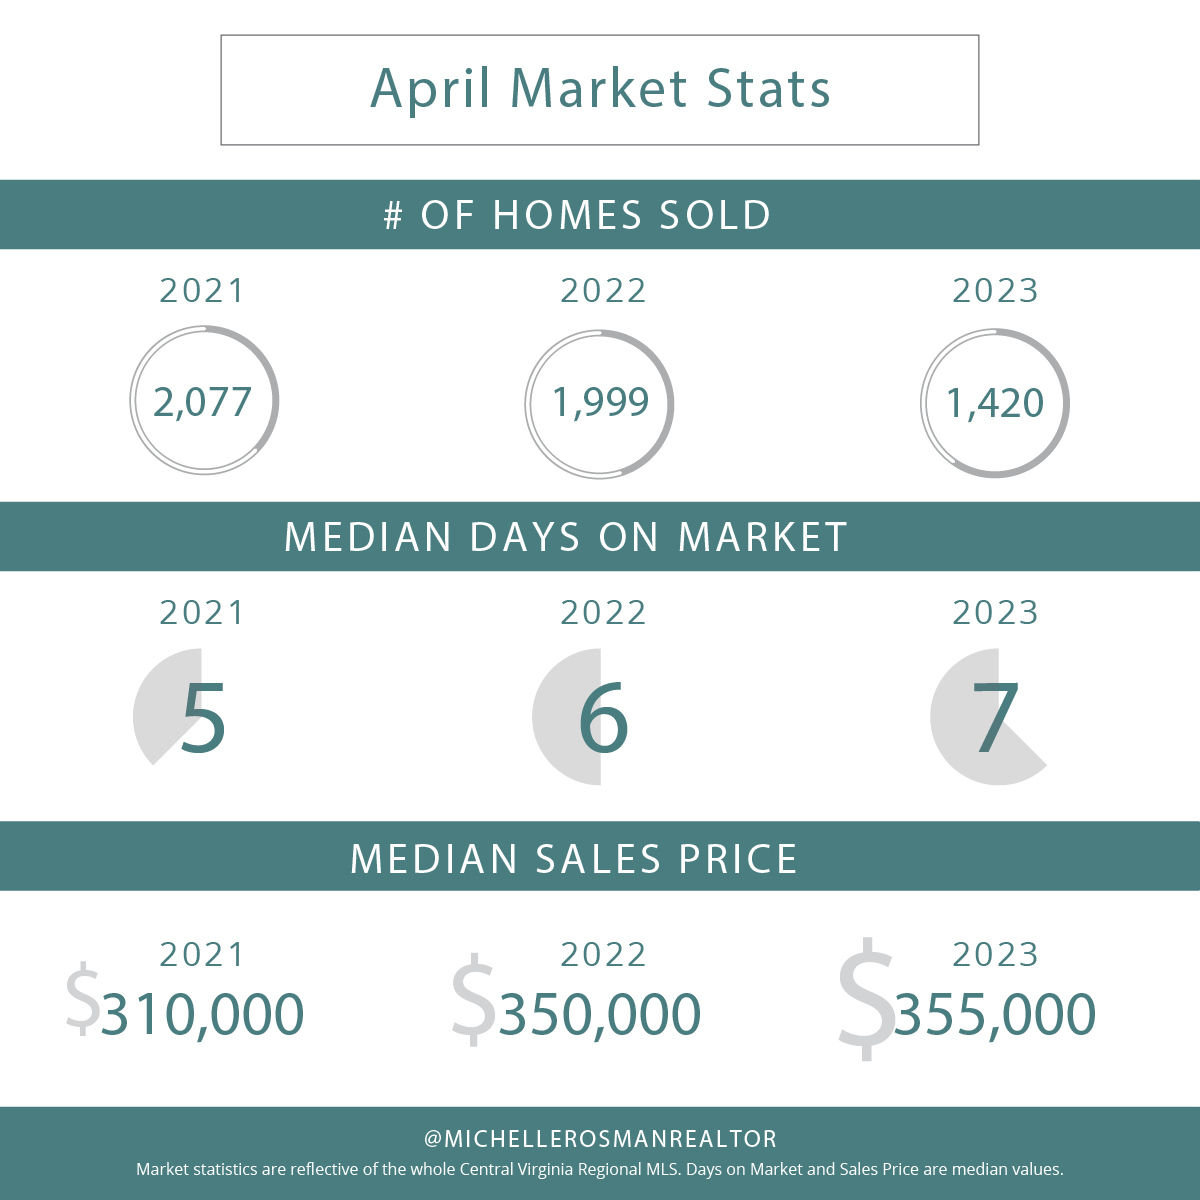 April 2023 Market Stats infographic